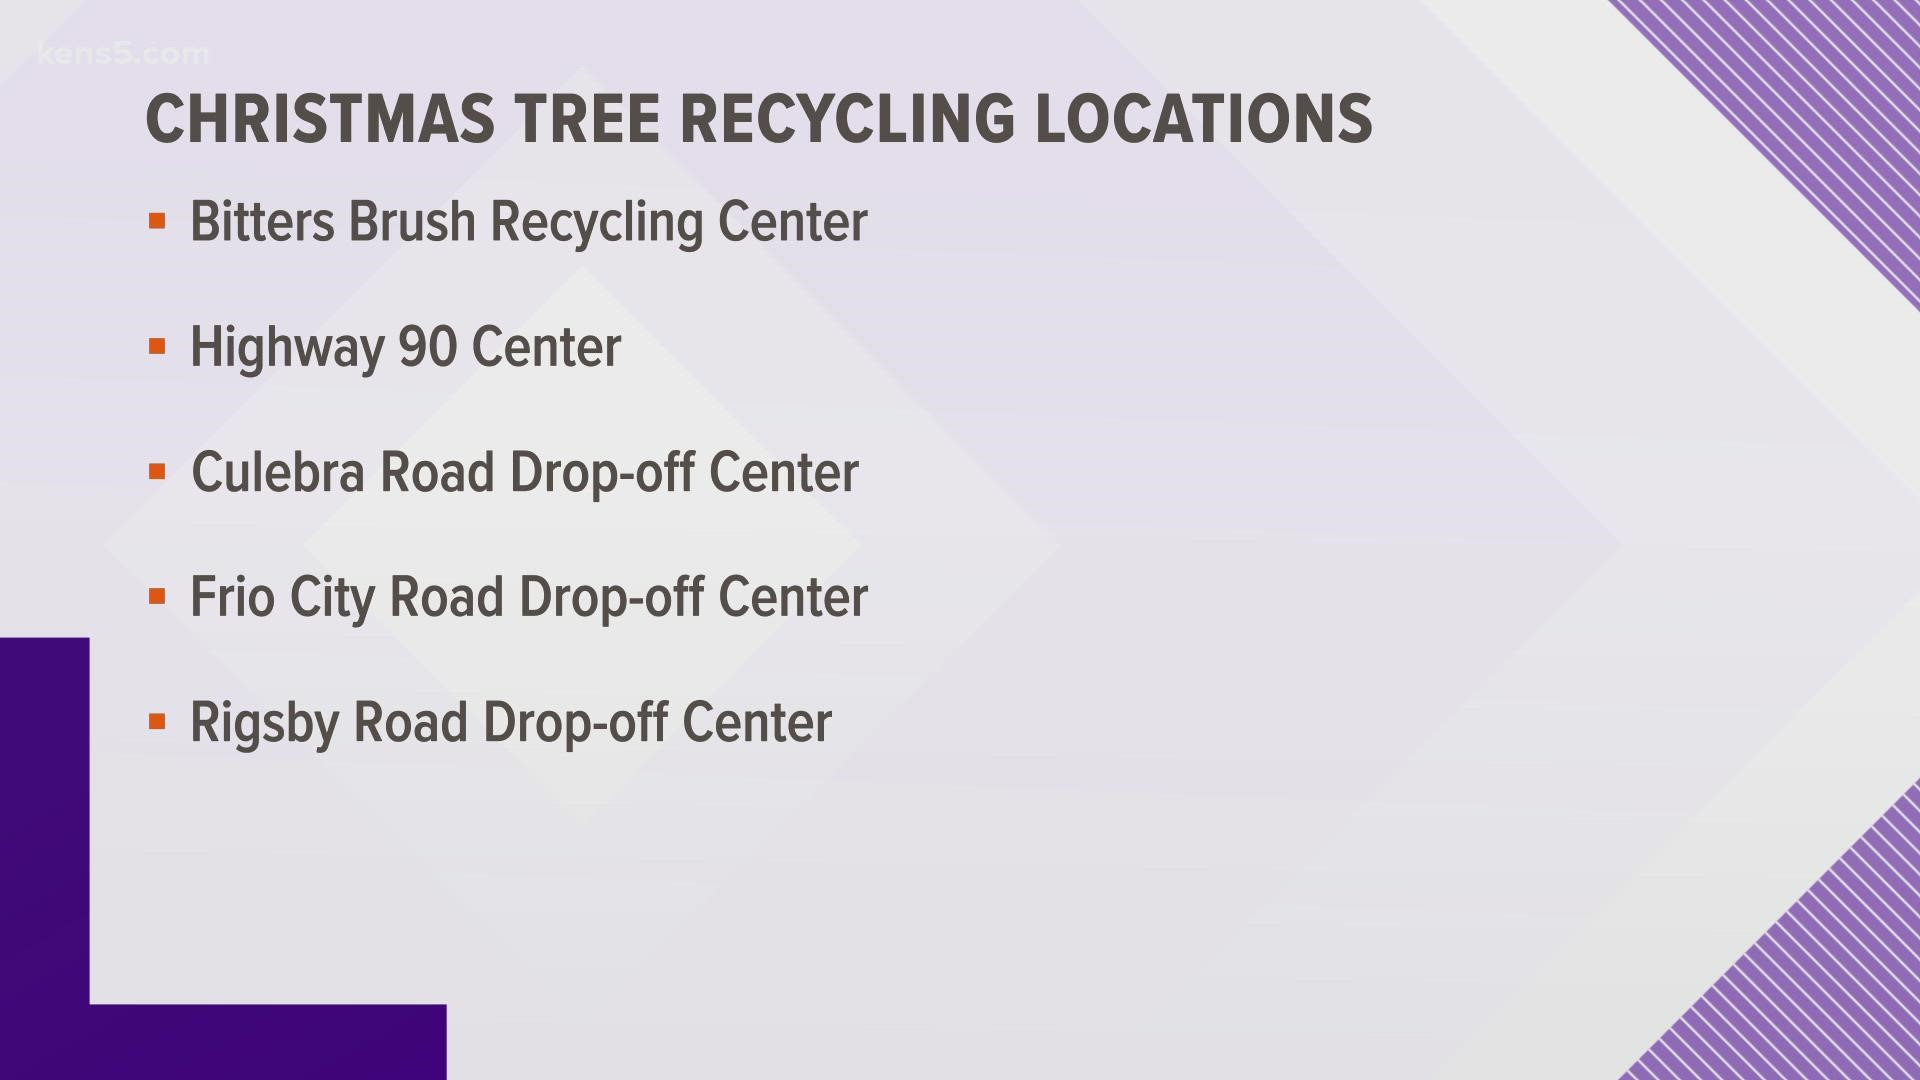 San Antonio has 5 locations to take your Christmas trees.